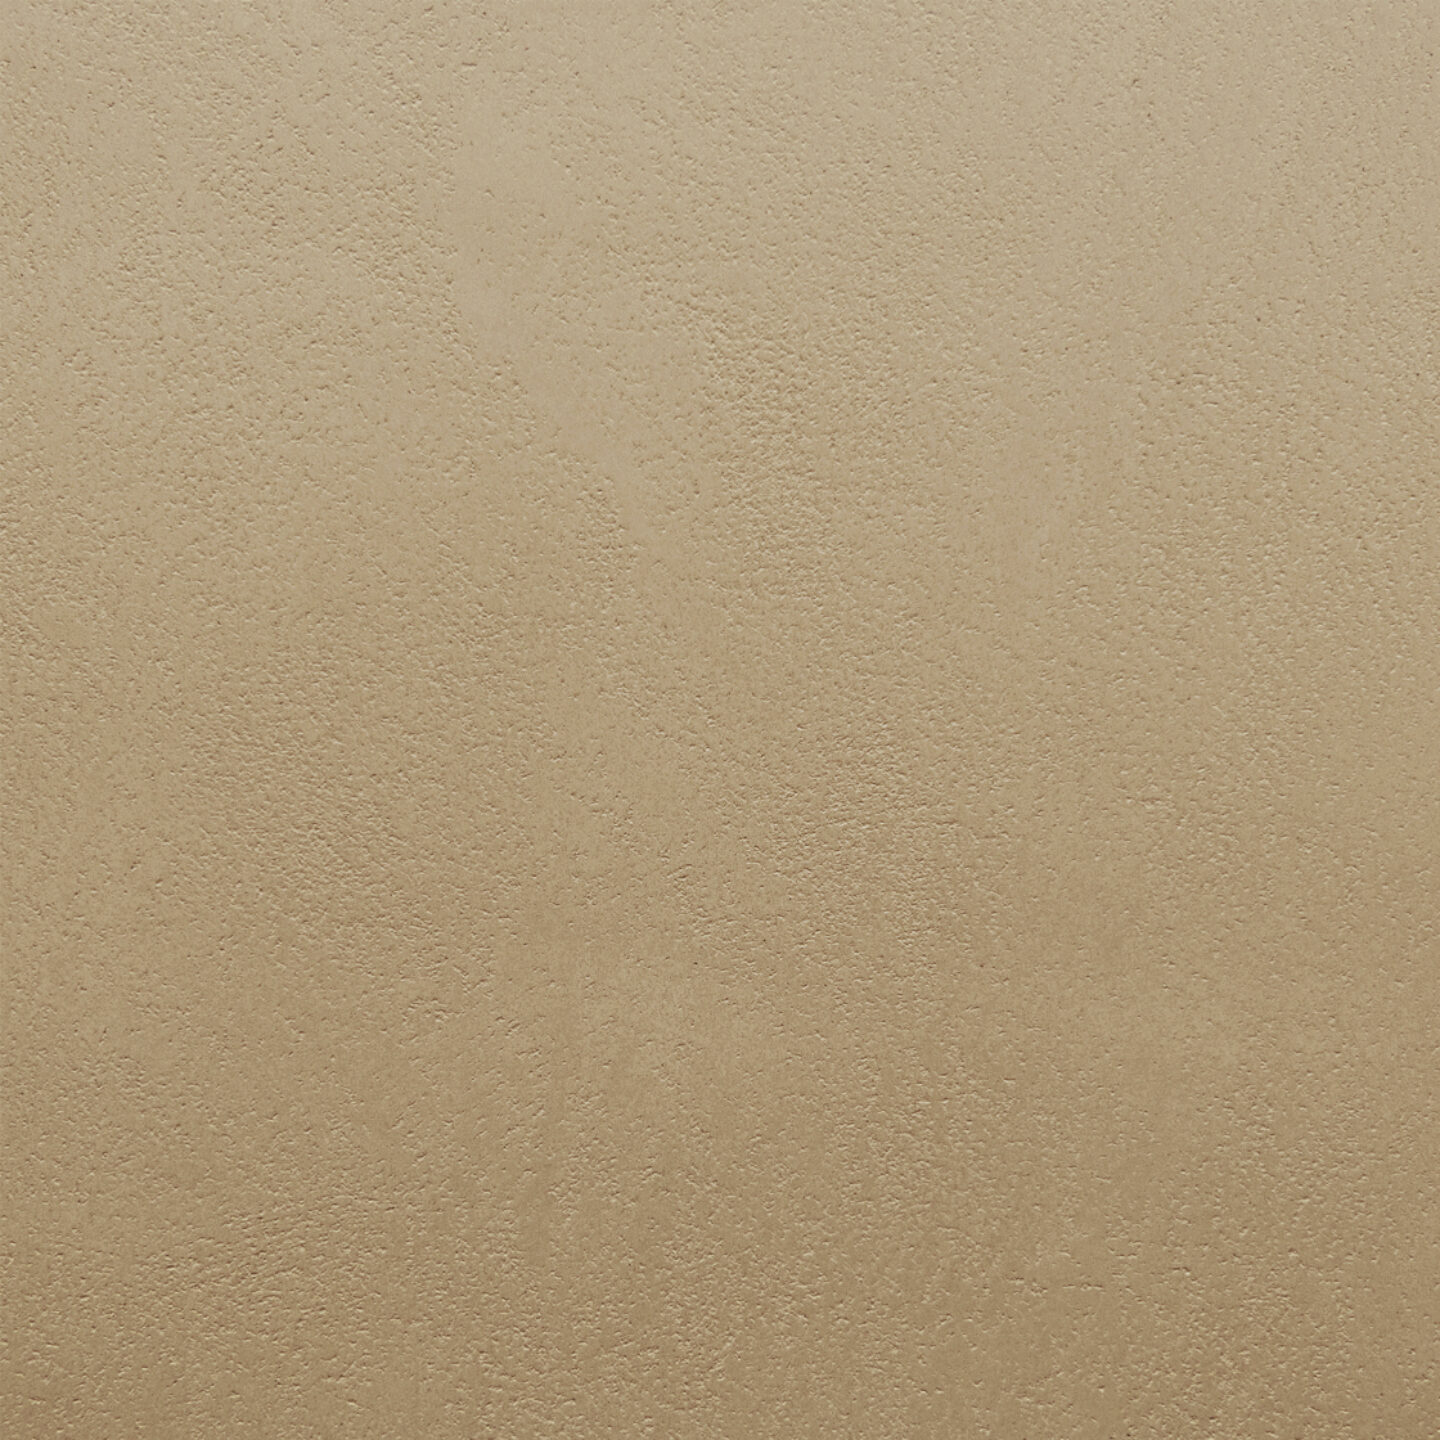 Close up of Armourcoat leatherstone exterior polished plaster finish - 54